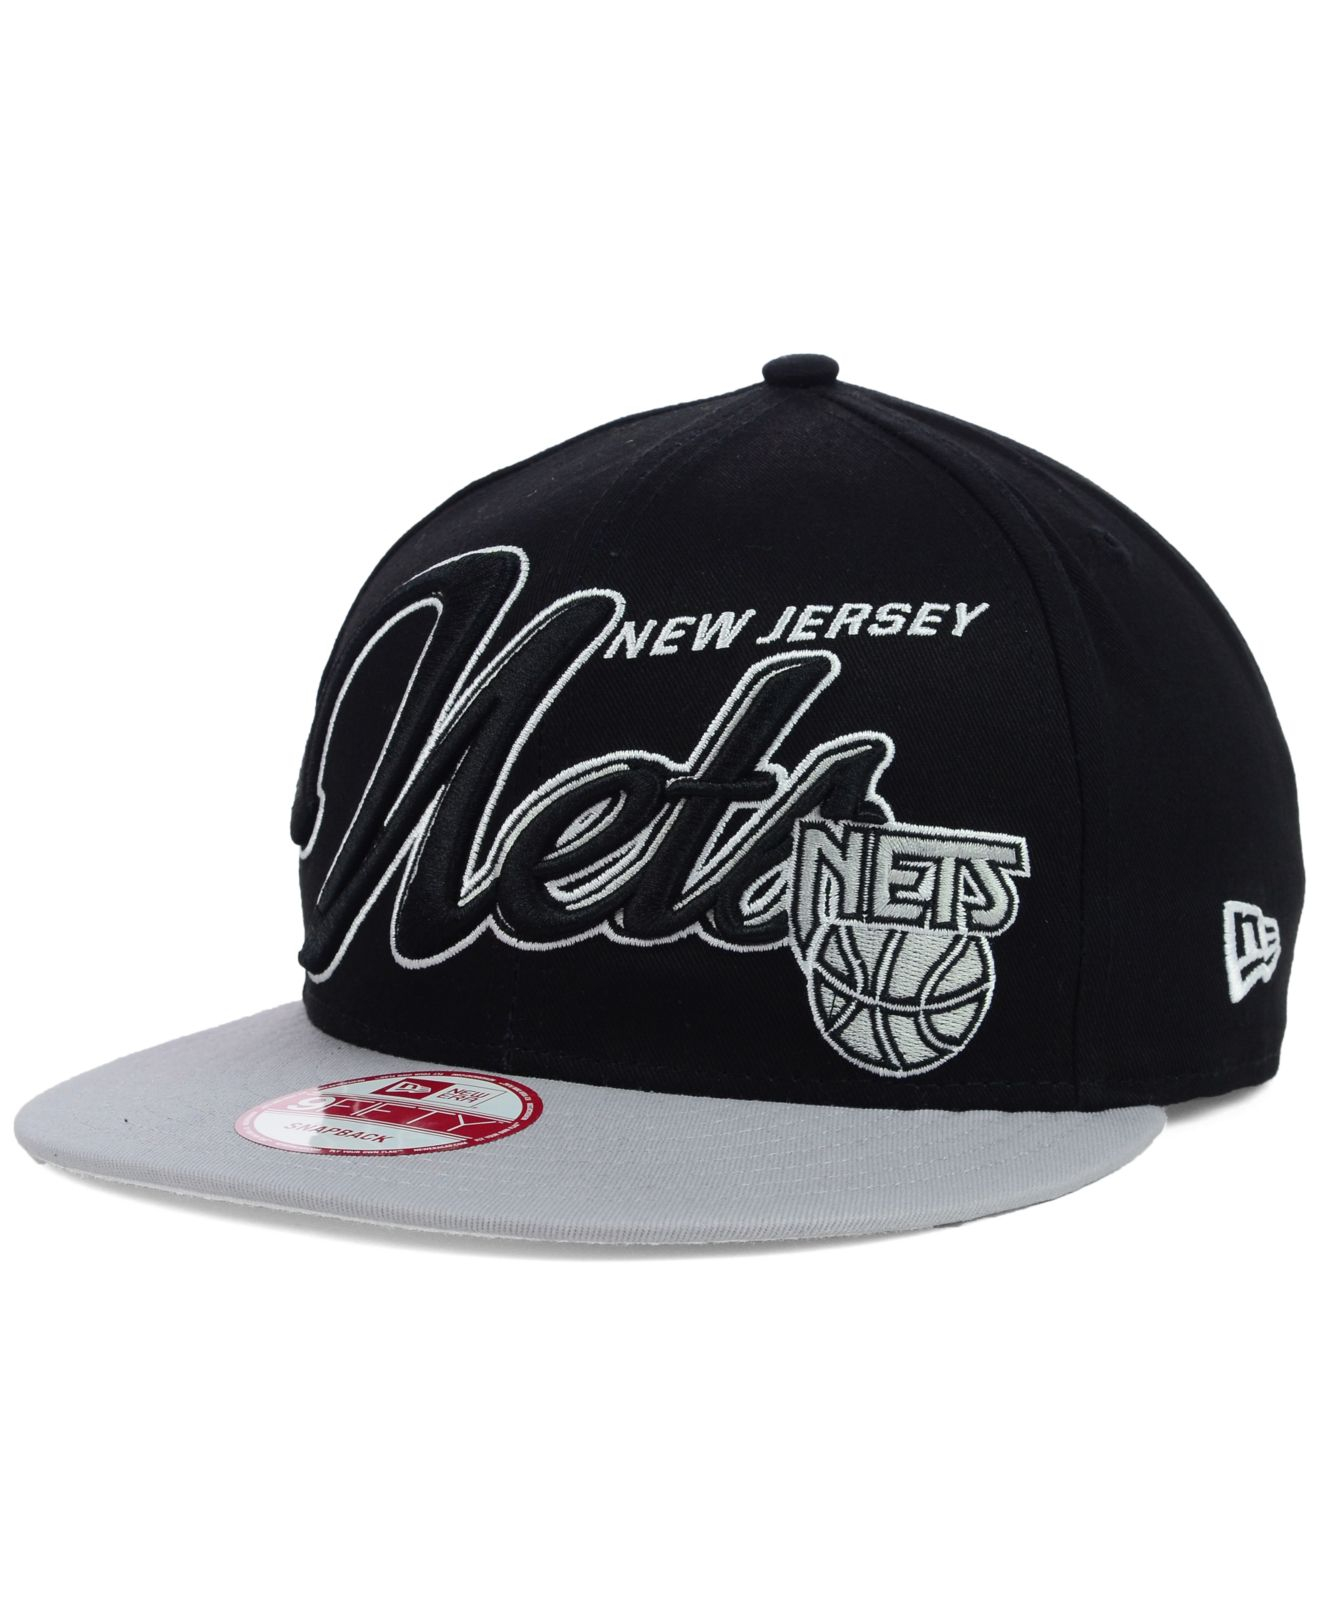 Lyst - Ktz New Jersey Nets Black-top 9fifty Snapback Cap in Black for Men